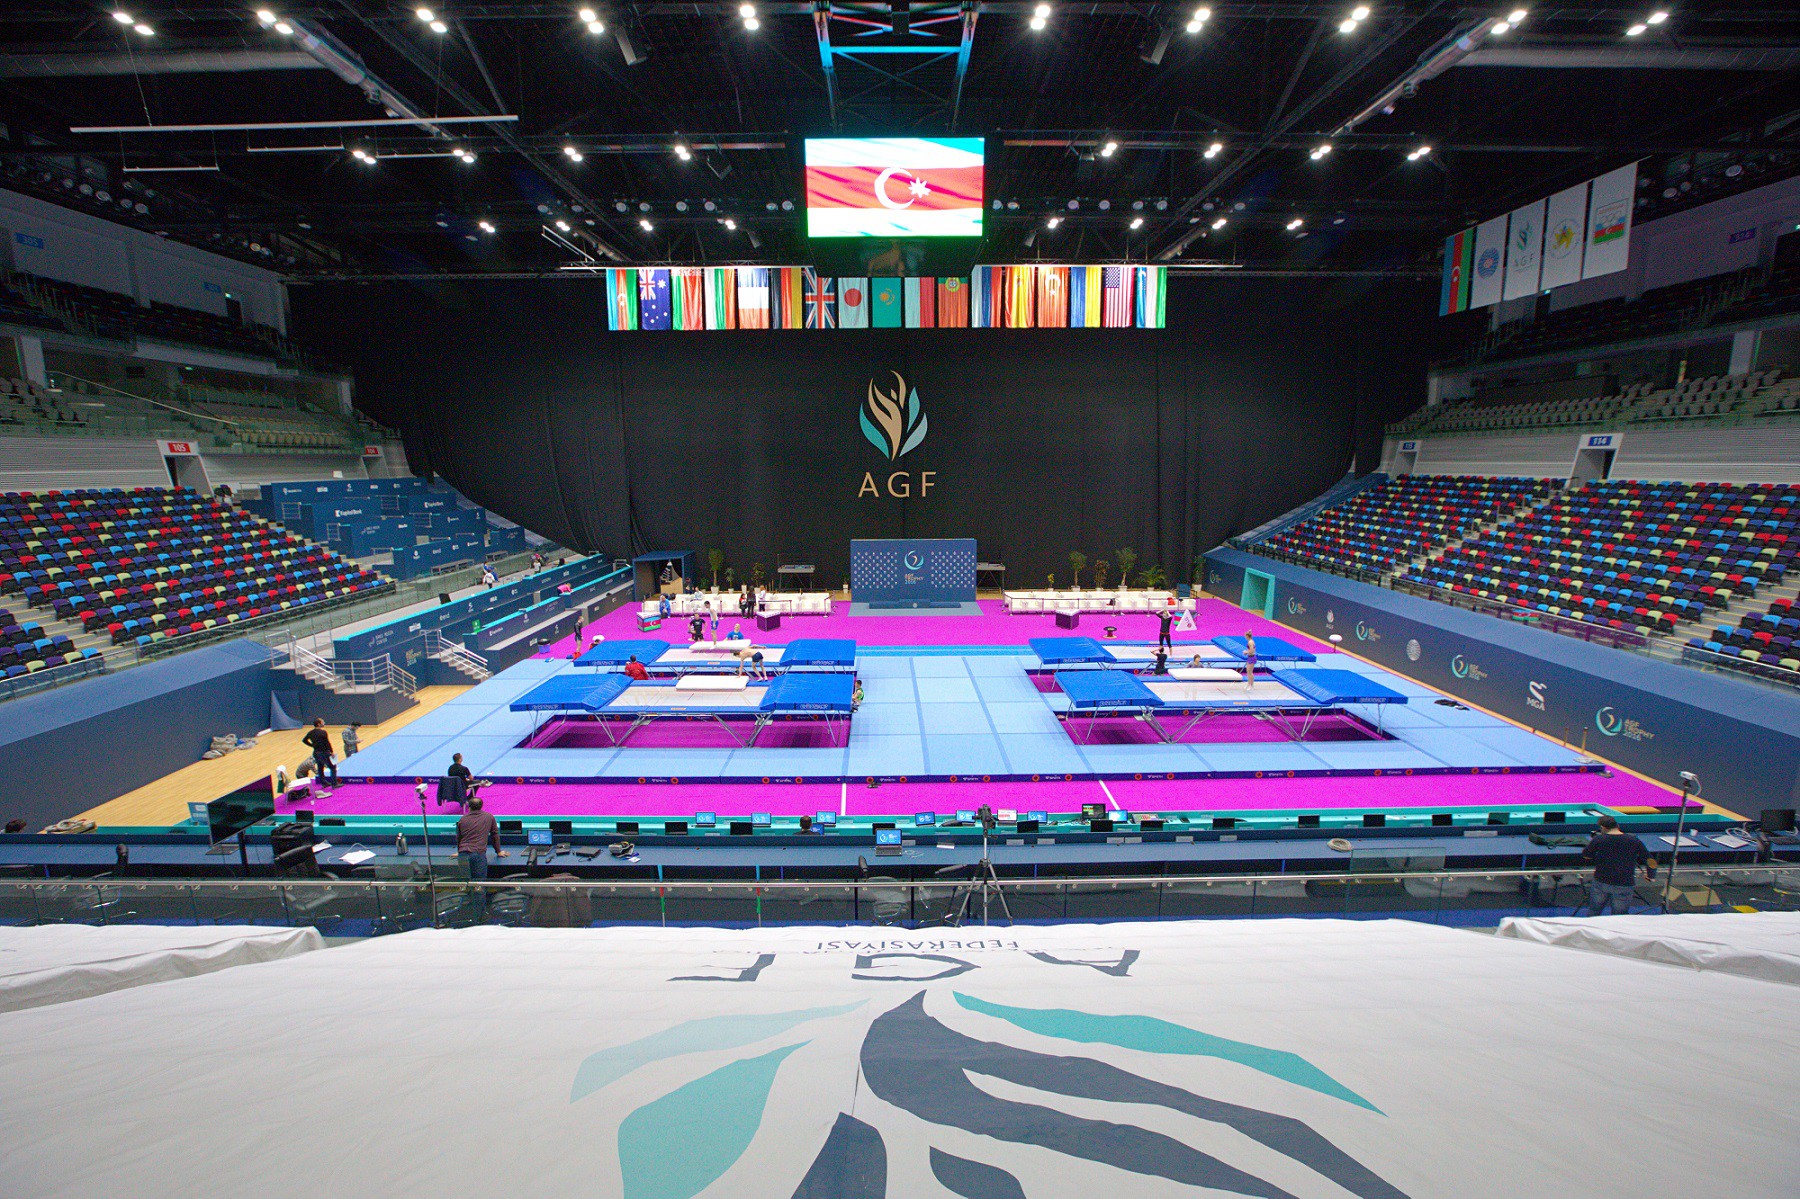 Kazakh coach: I have found myself in "Gymnastics paradise"